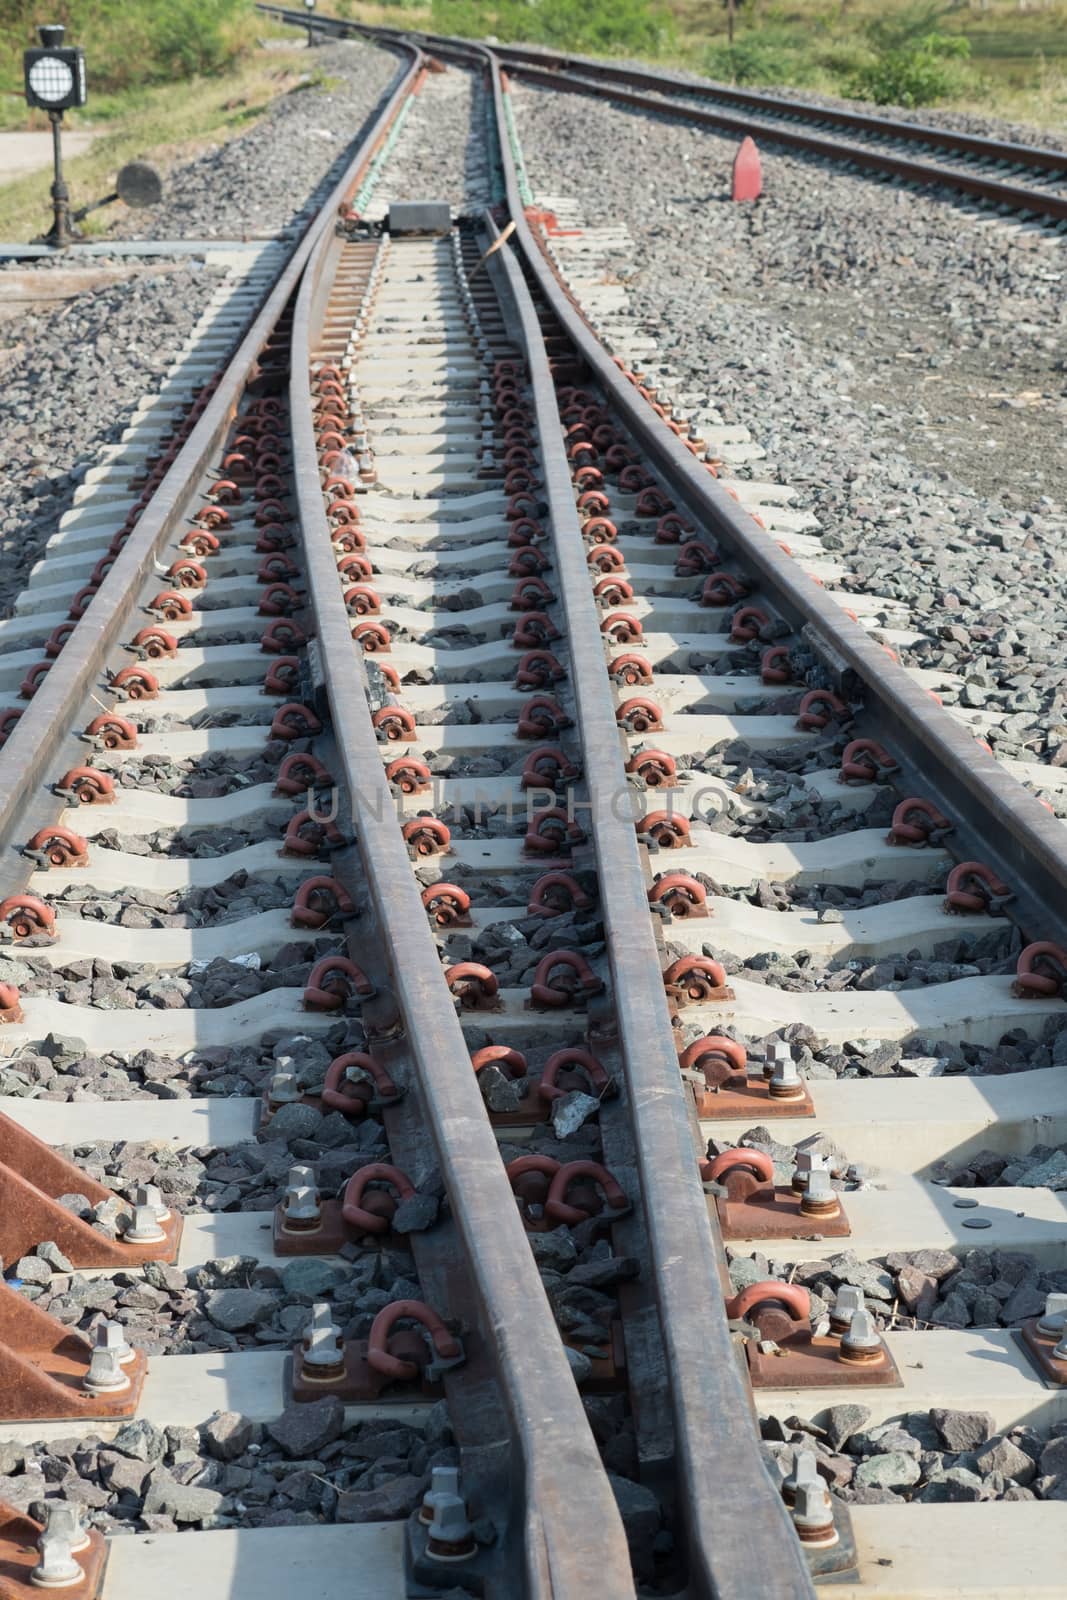 Railroad tracks detail close up. by nikonlike